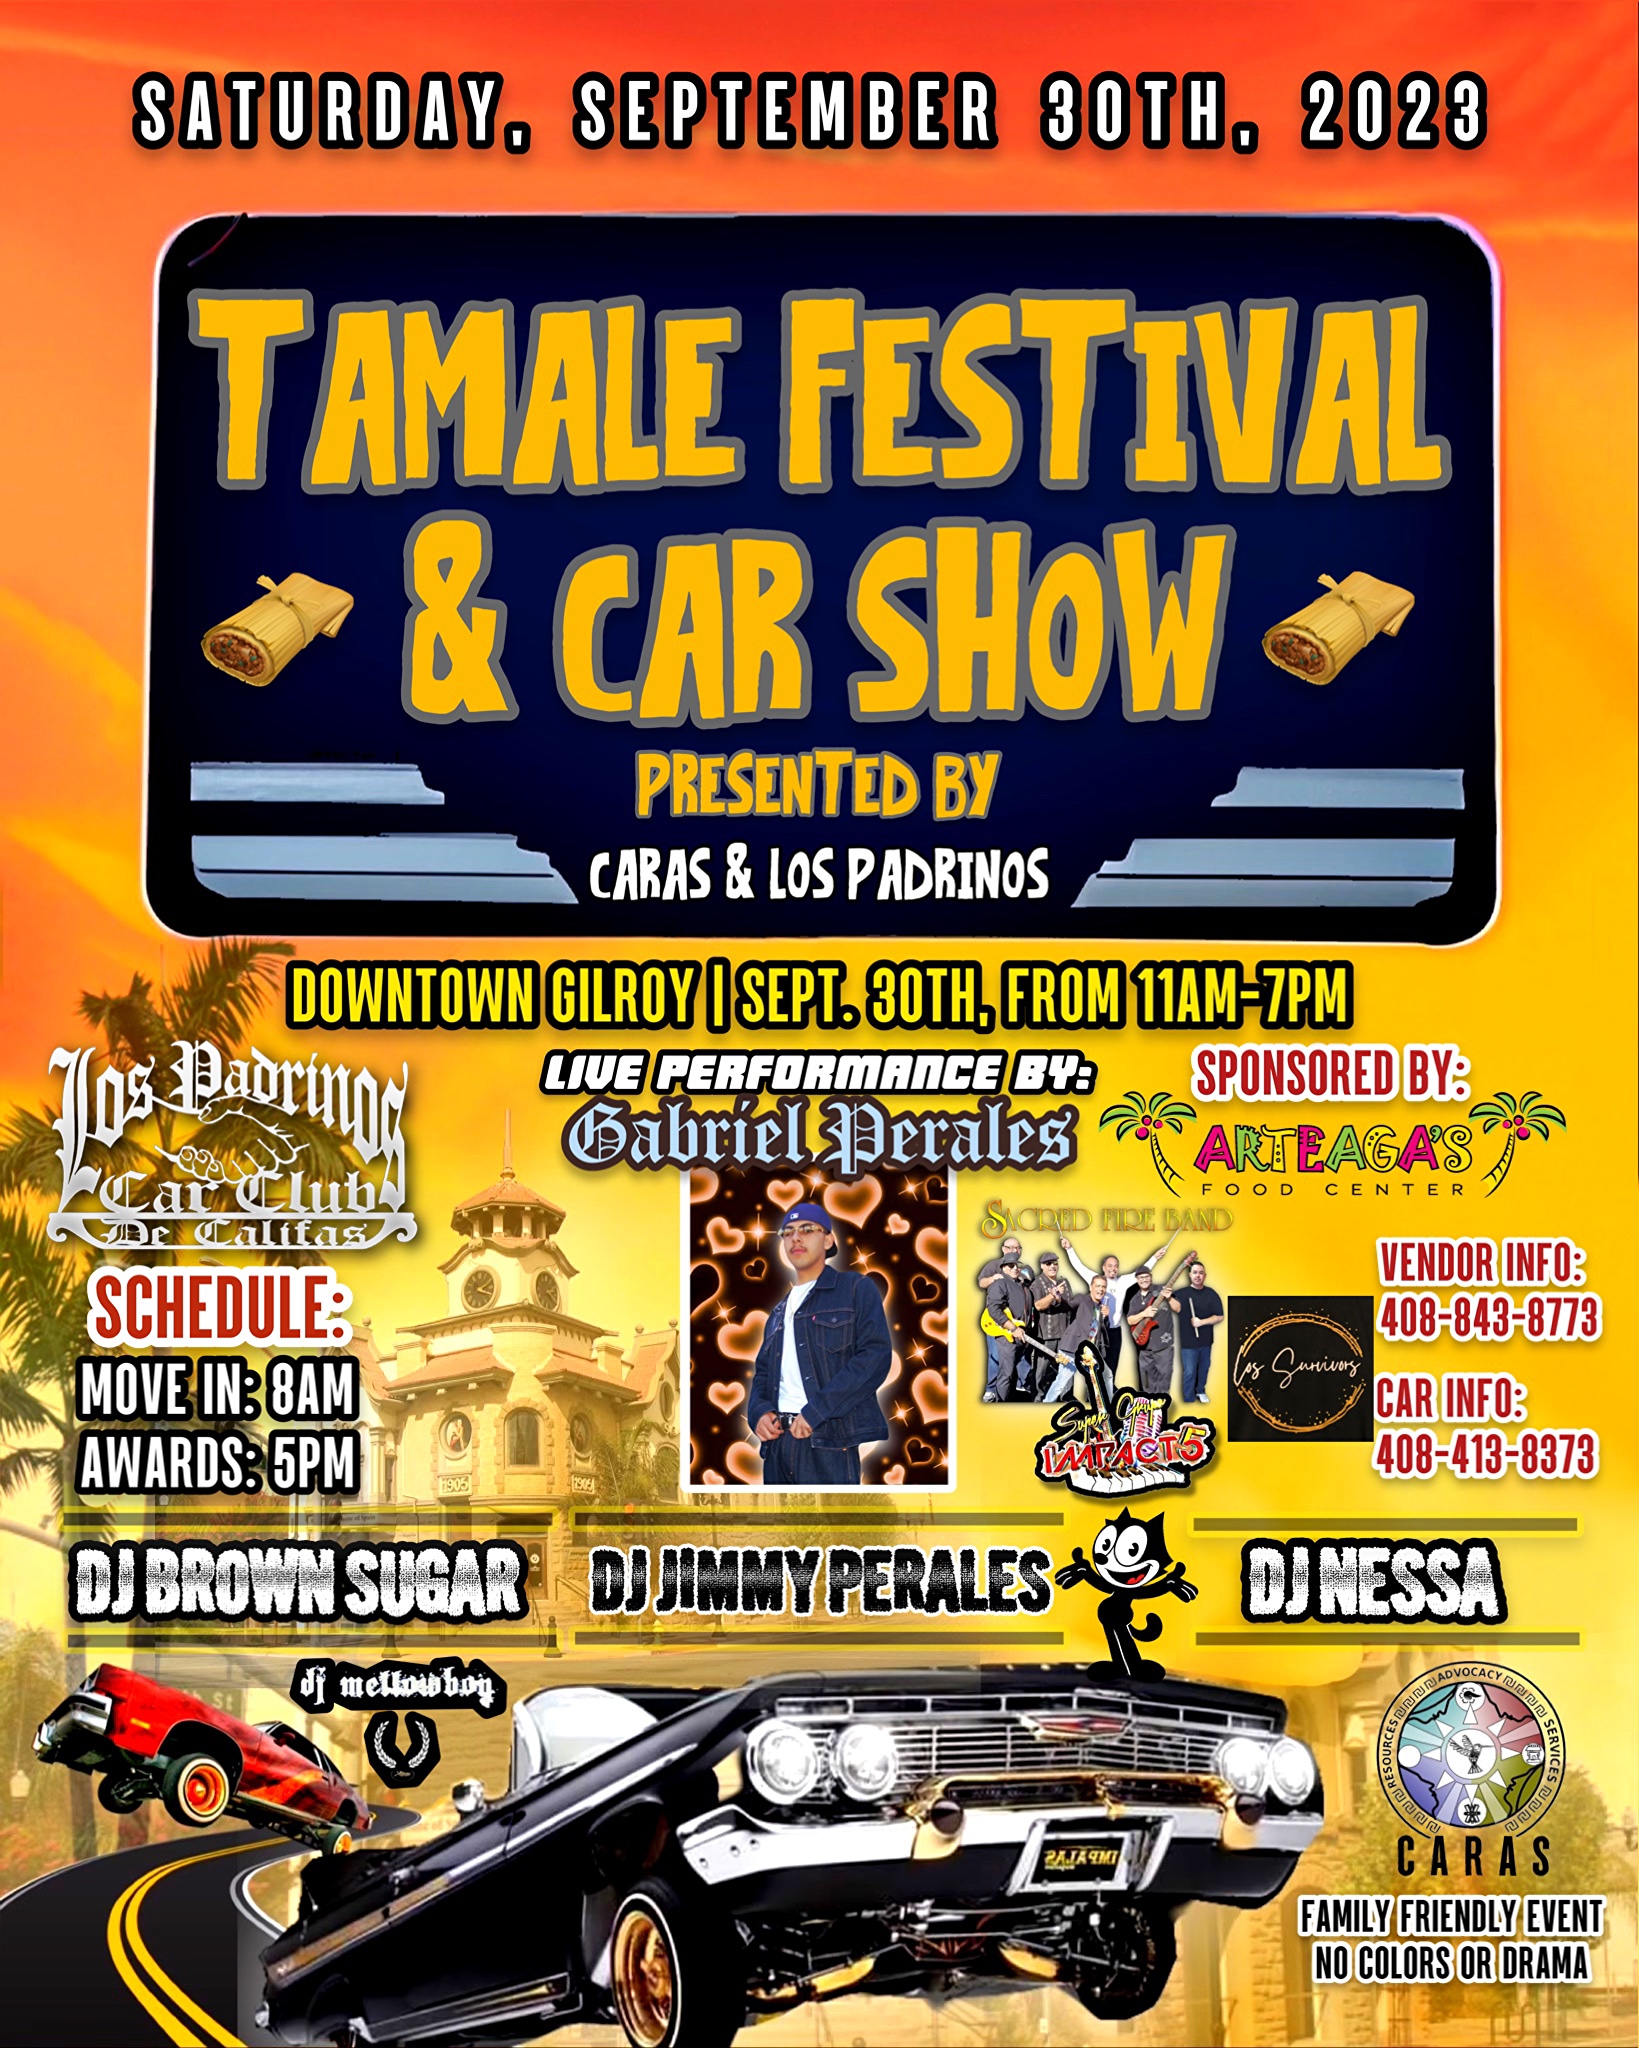 Tamale Festival & Car Show